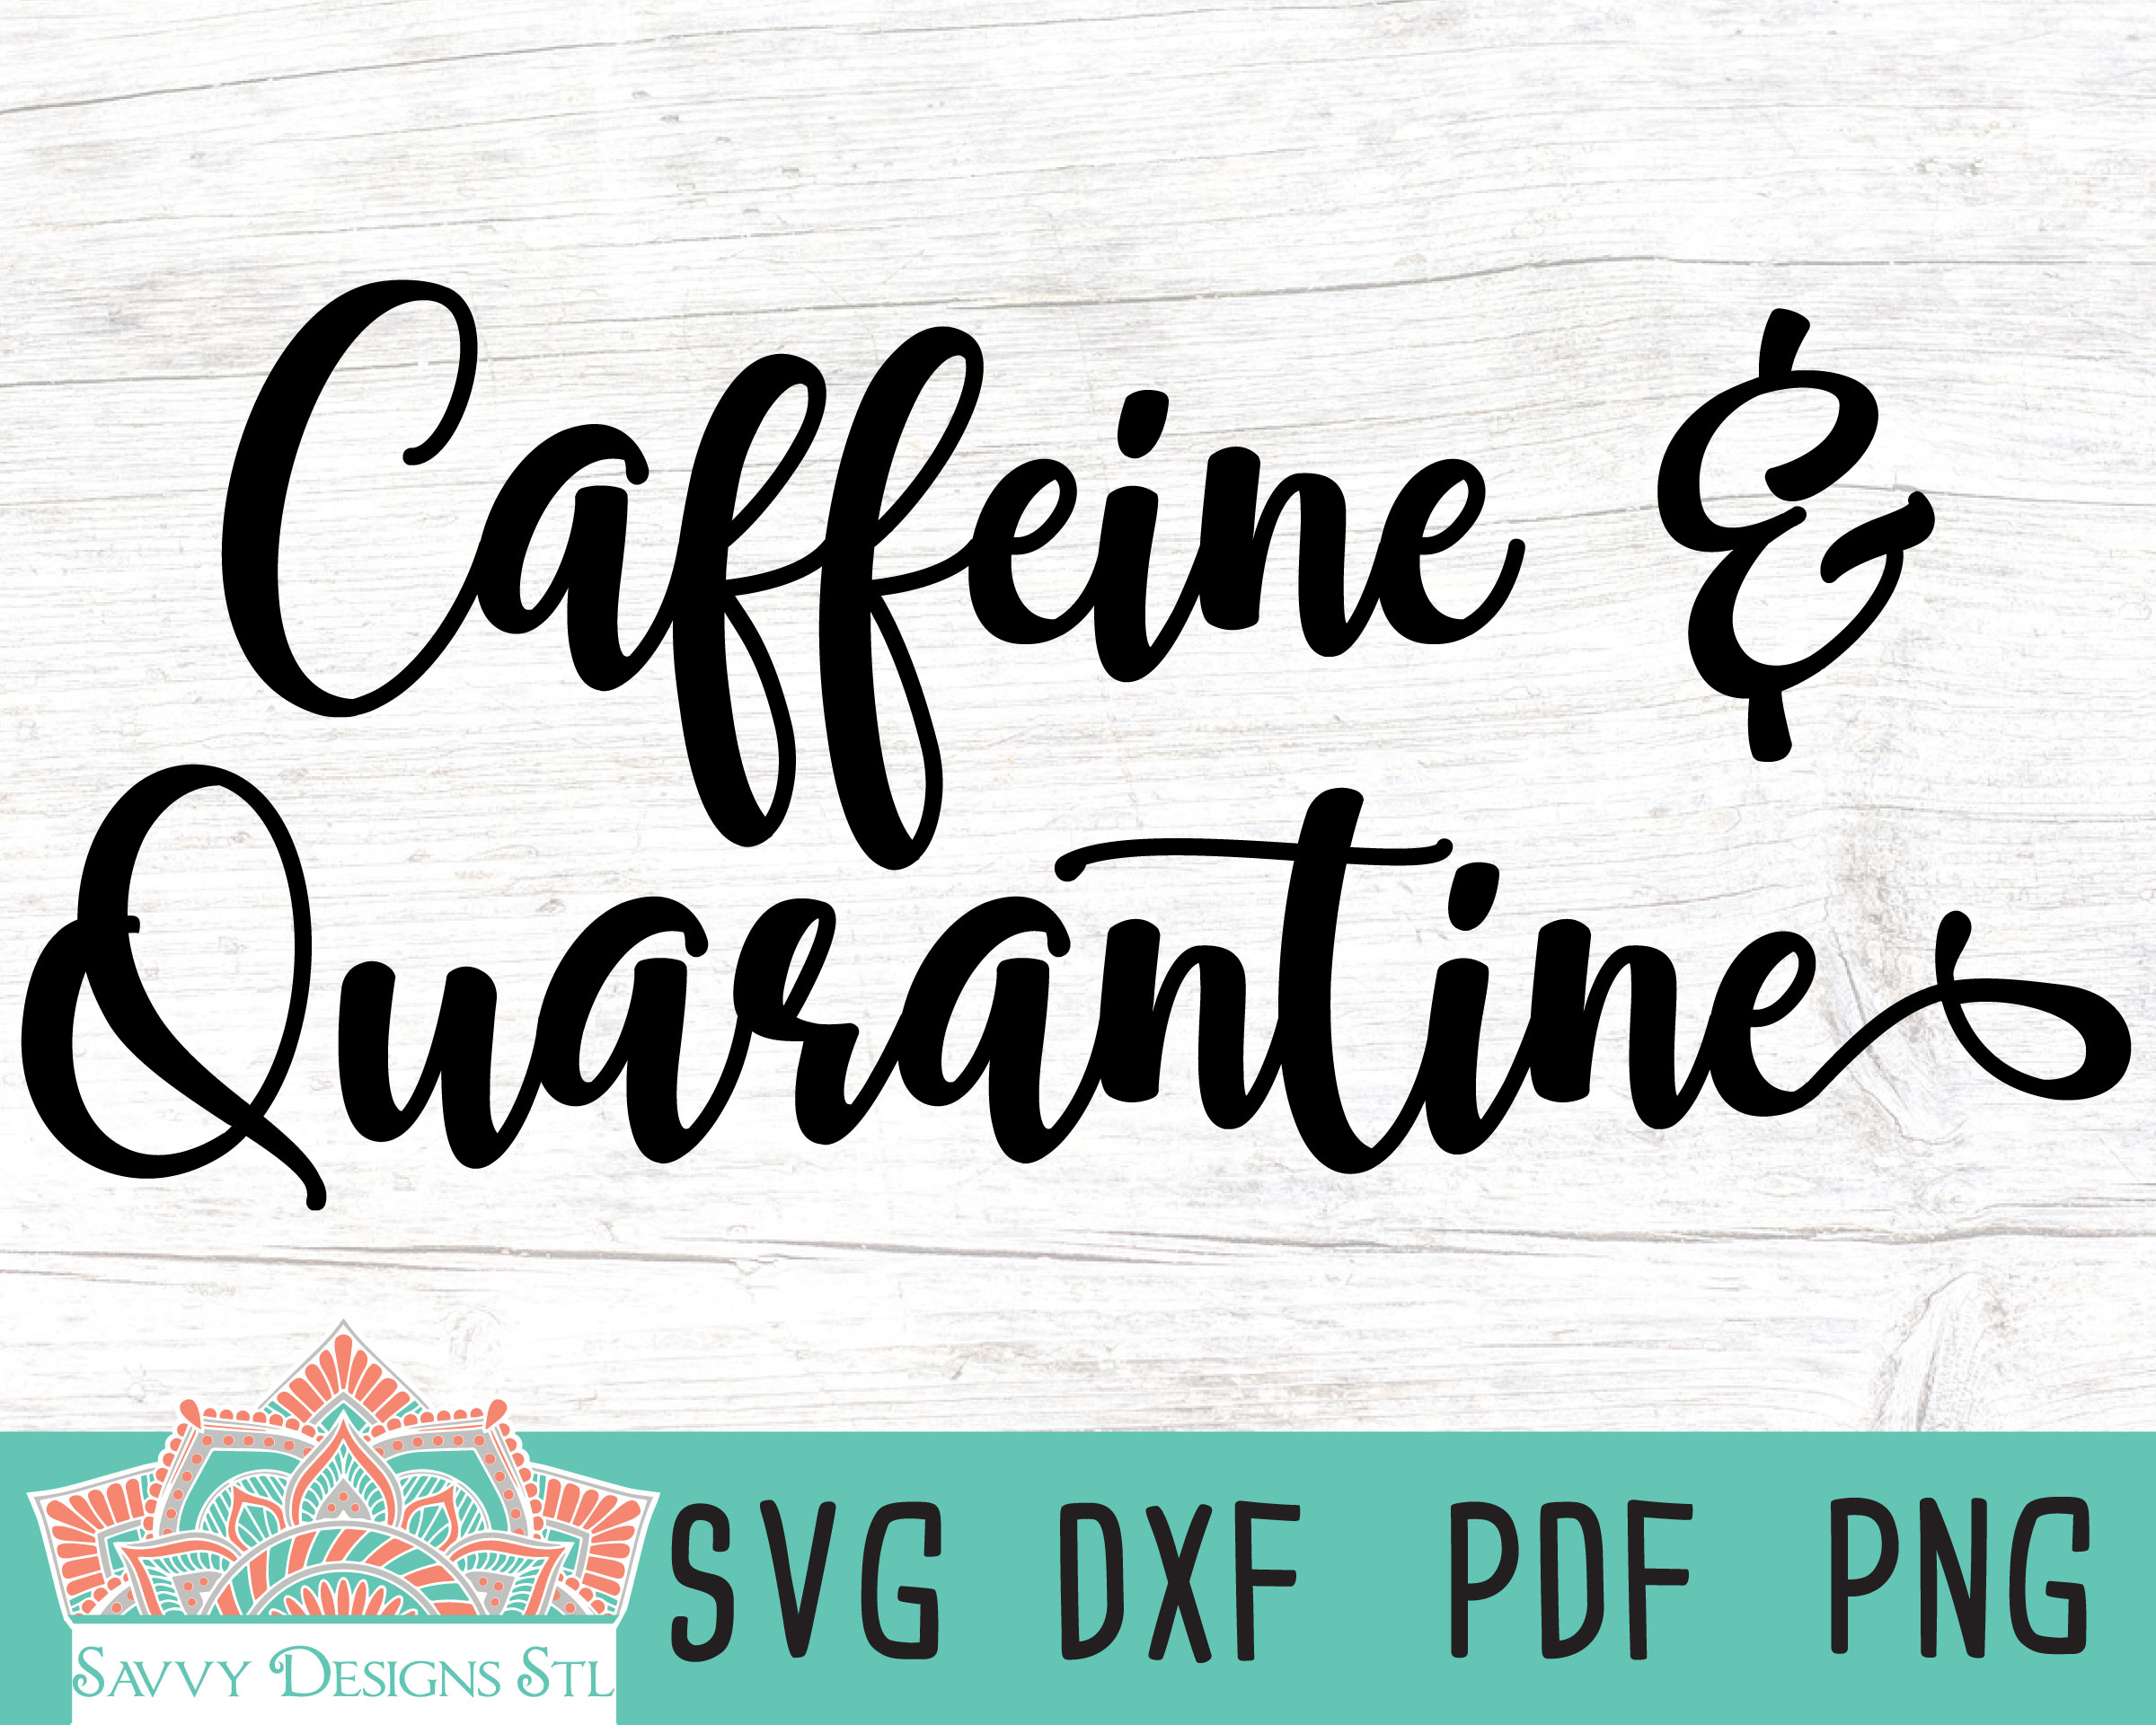 Download Caffeine And Quarantine Cut File Savvy Designs Stl